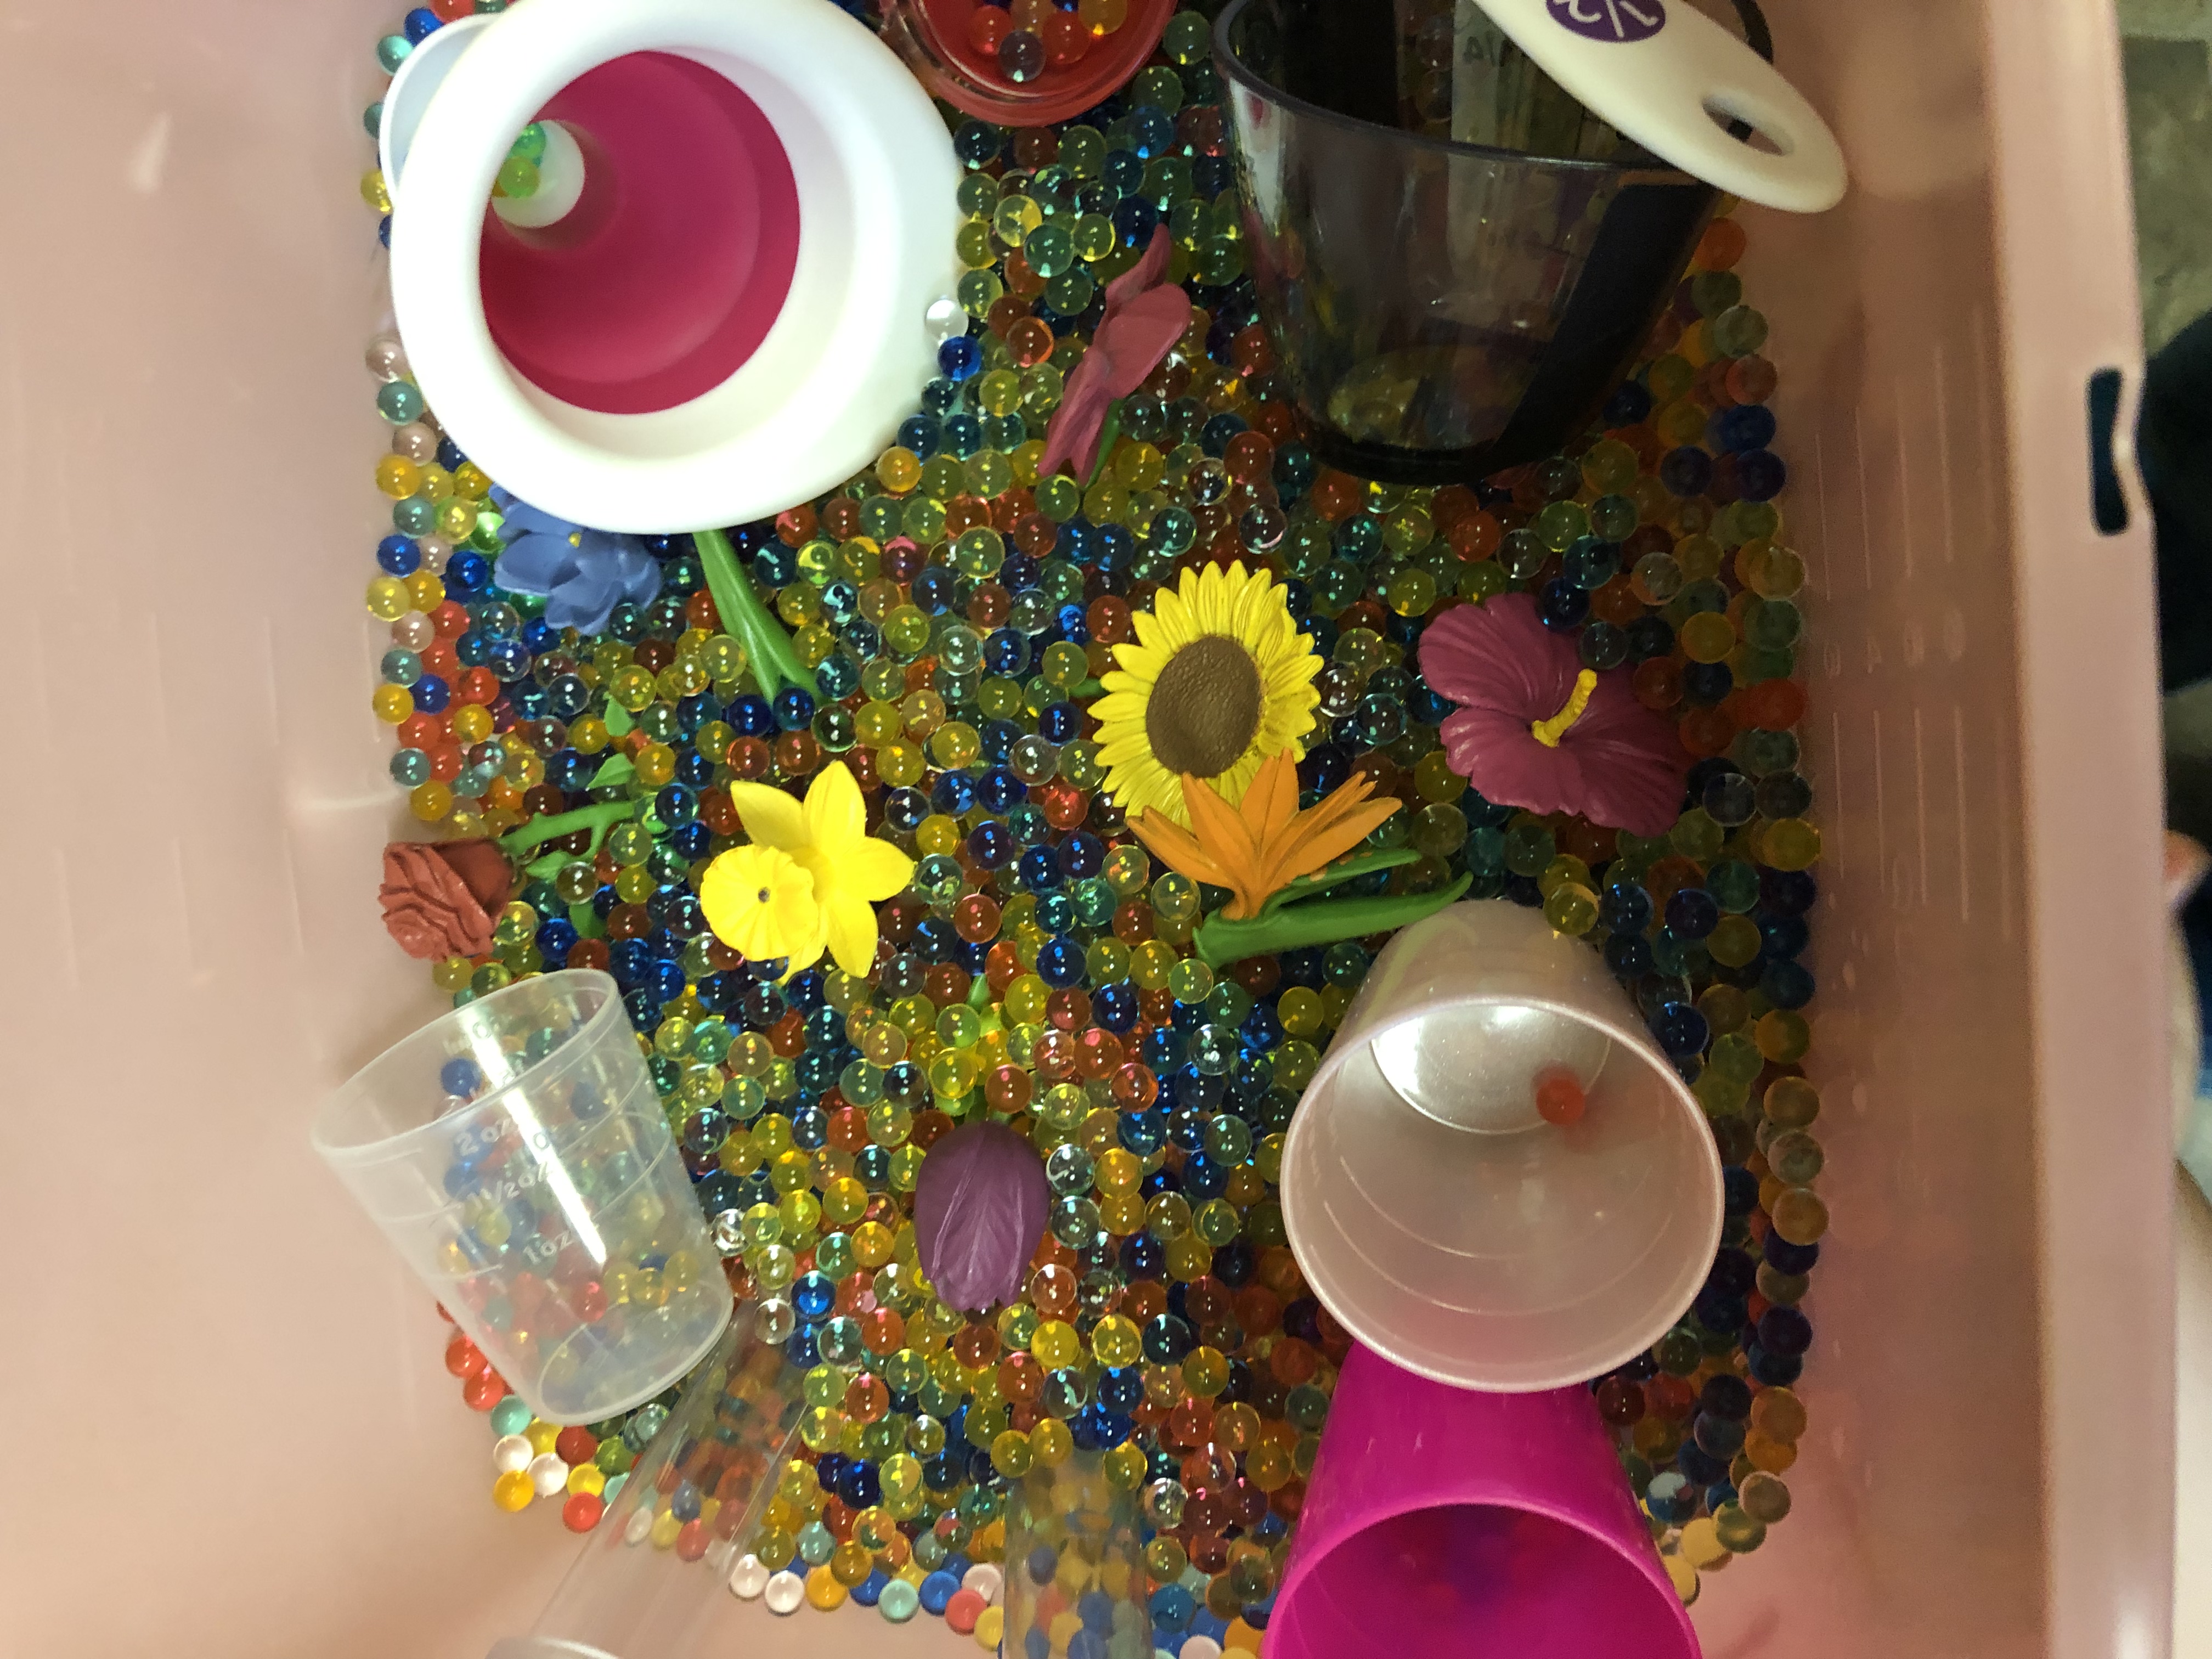 Flowers and water beads sensory bin